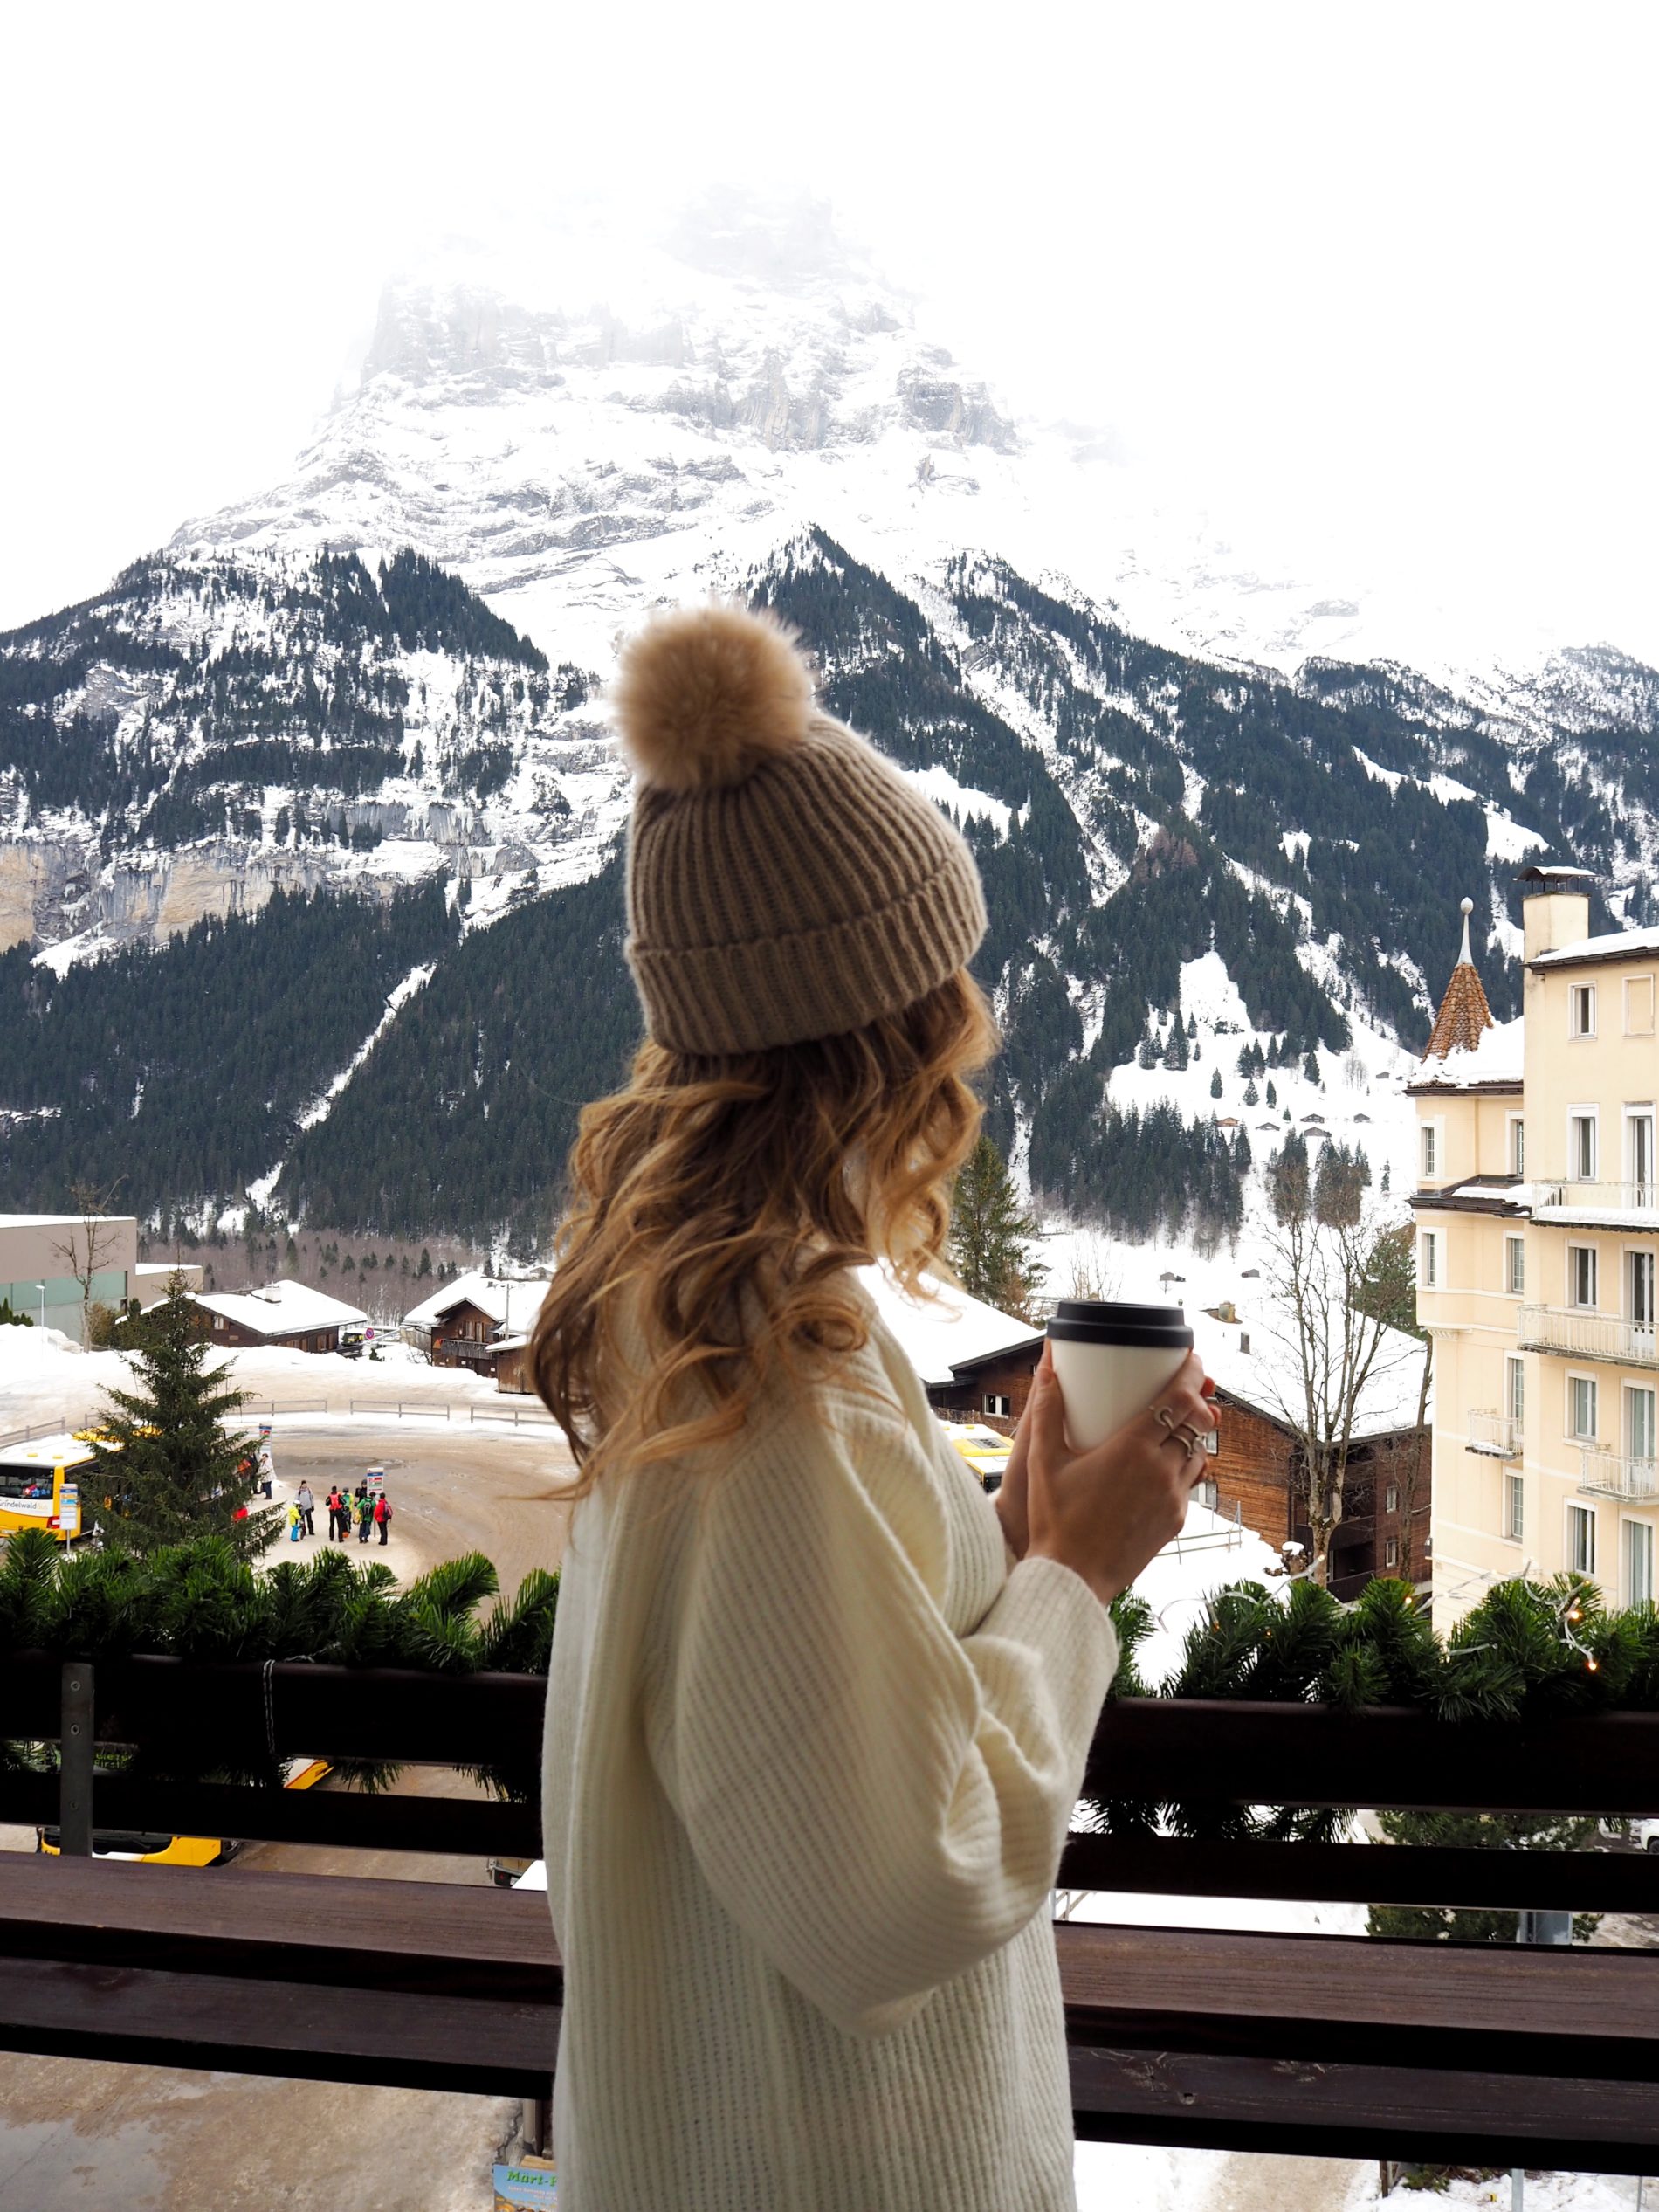 Christmas Holidays at the Hotel Kreuz & Post in Grindelwald/Switzerland